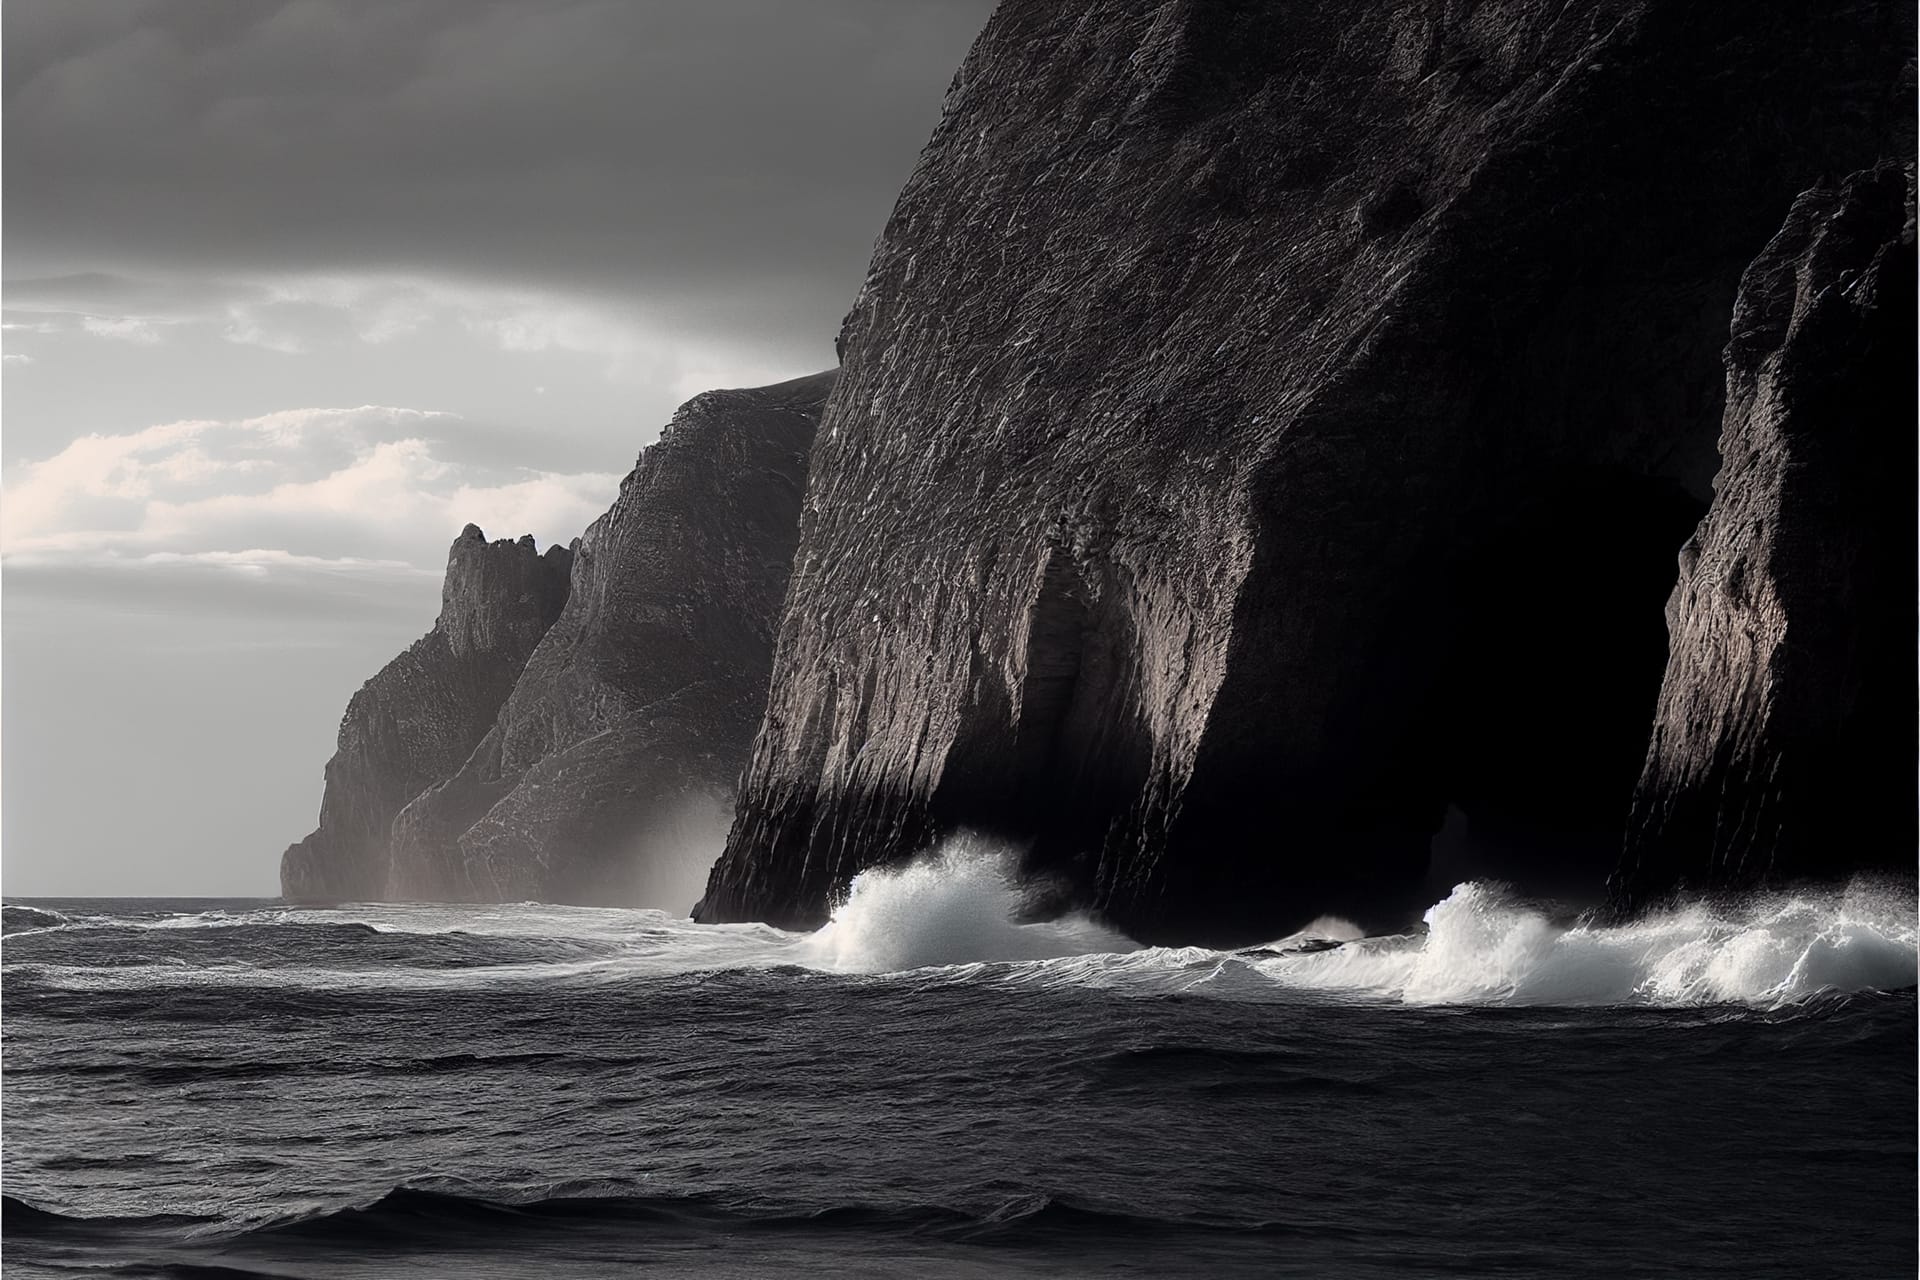 Coastal landscape with high cliffs crashing waves from edge edge